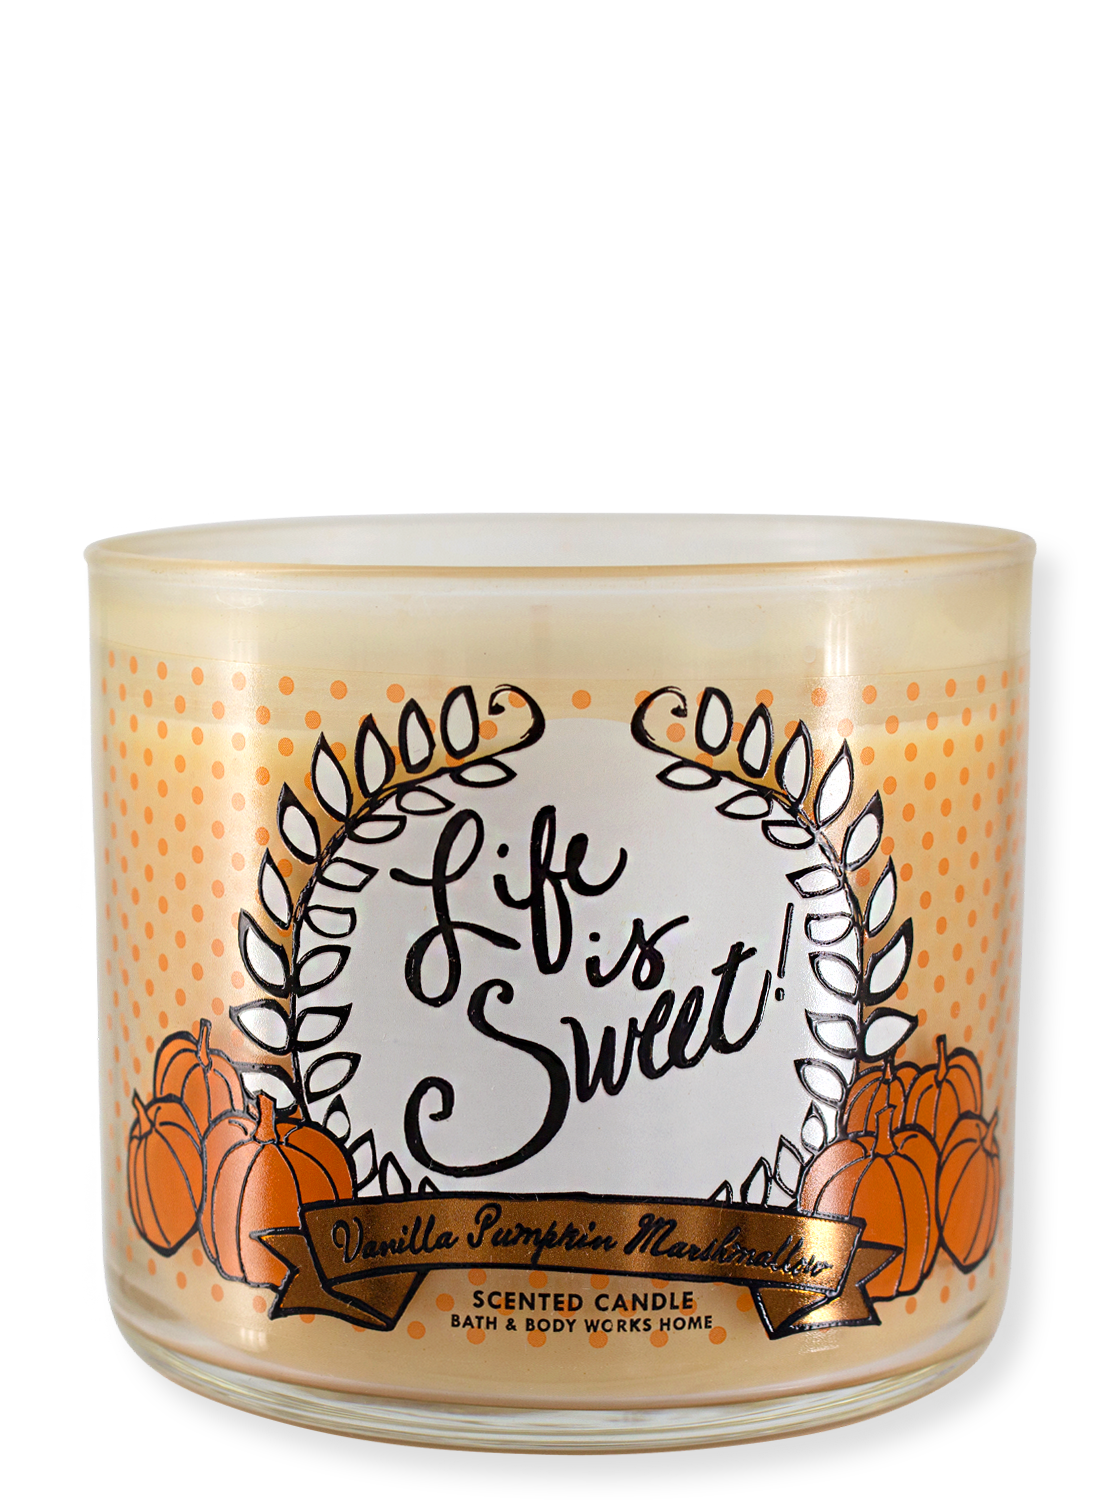 Rarity - 3 -Poke Candle - Het leven is lief! - Vanille Pumpkin Marshmallow - 411G